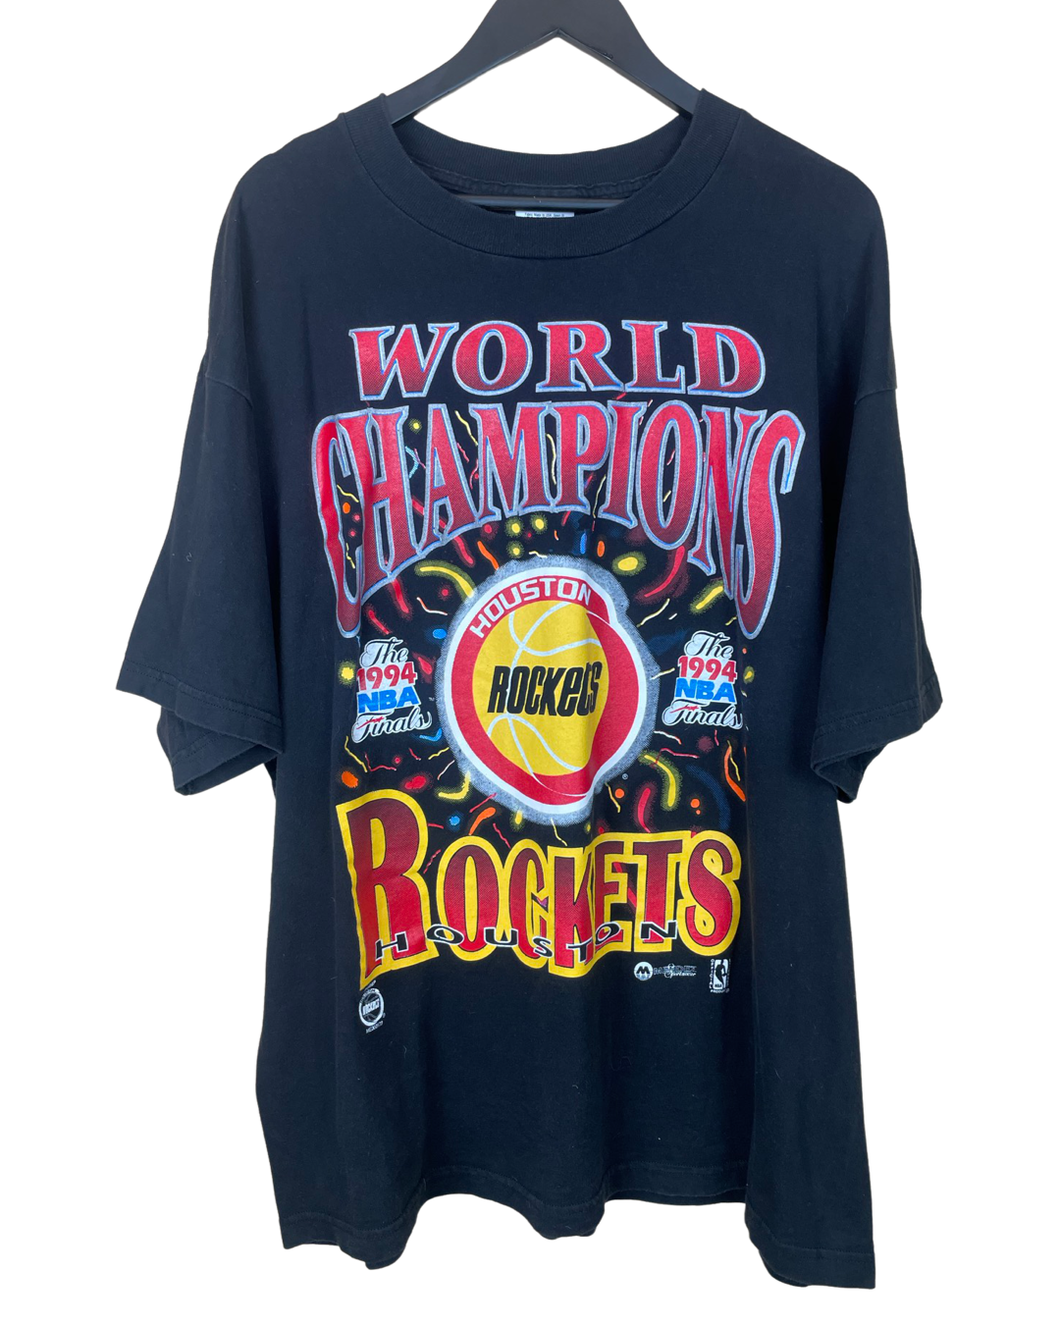 1994 HOUSTON ROCKETS WORLD CHAMPIONS TEE - XL